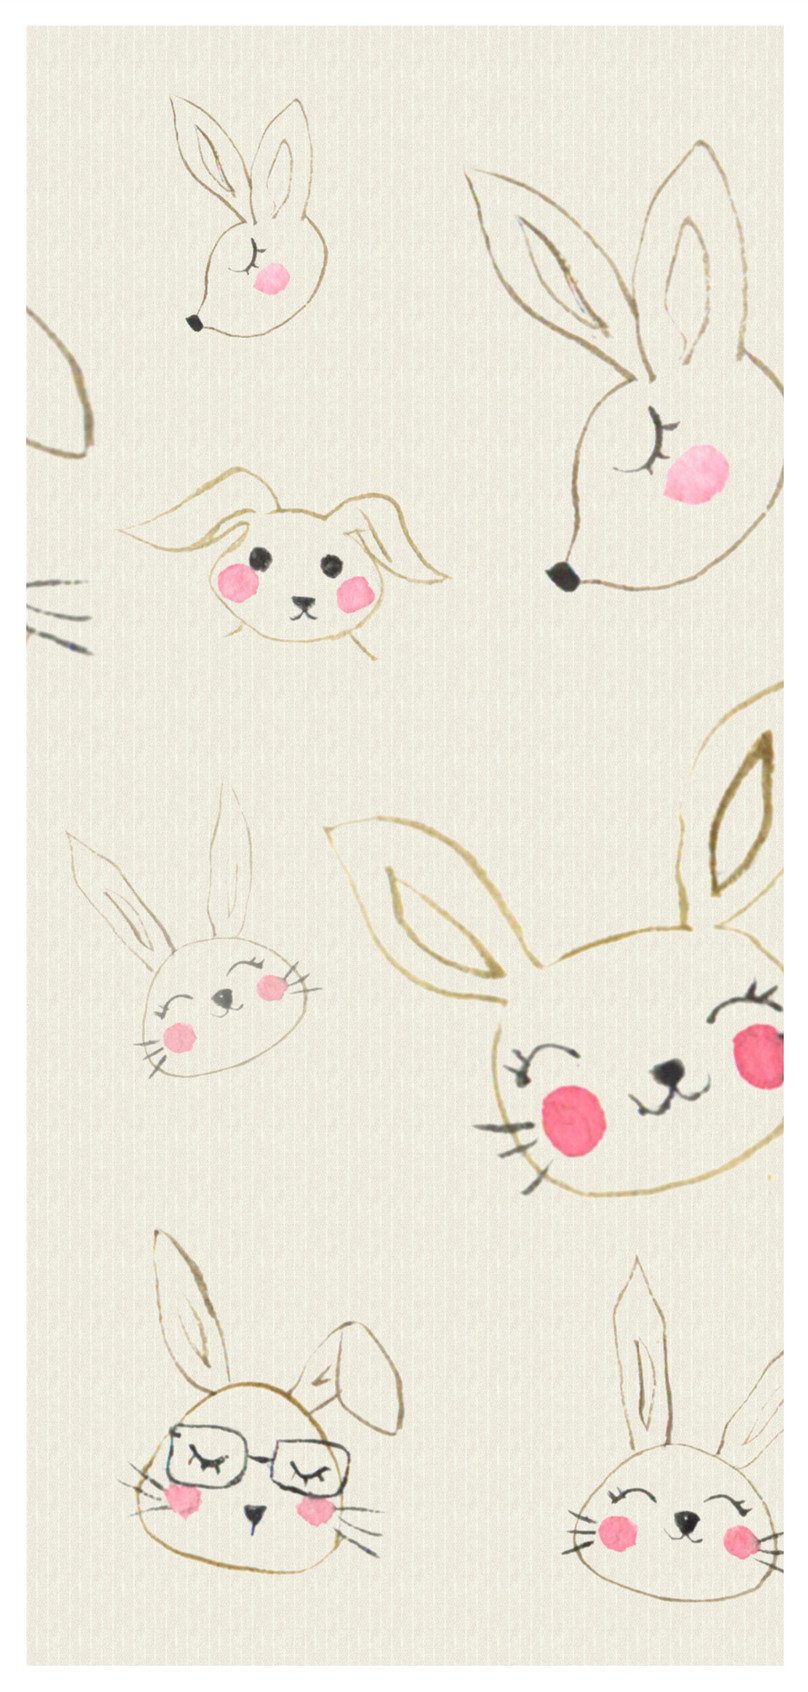 130 Girly wallpapers ideas | cute wallpapers, iphone wallpaper, wallpaper